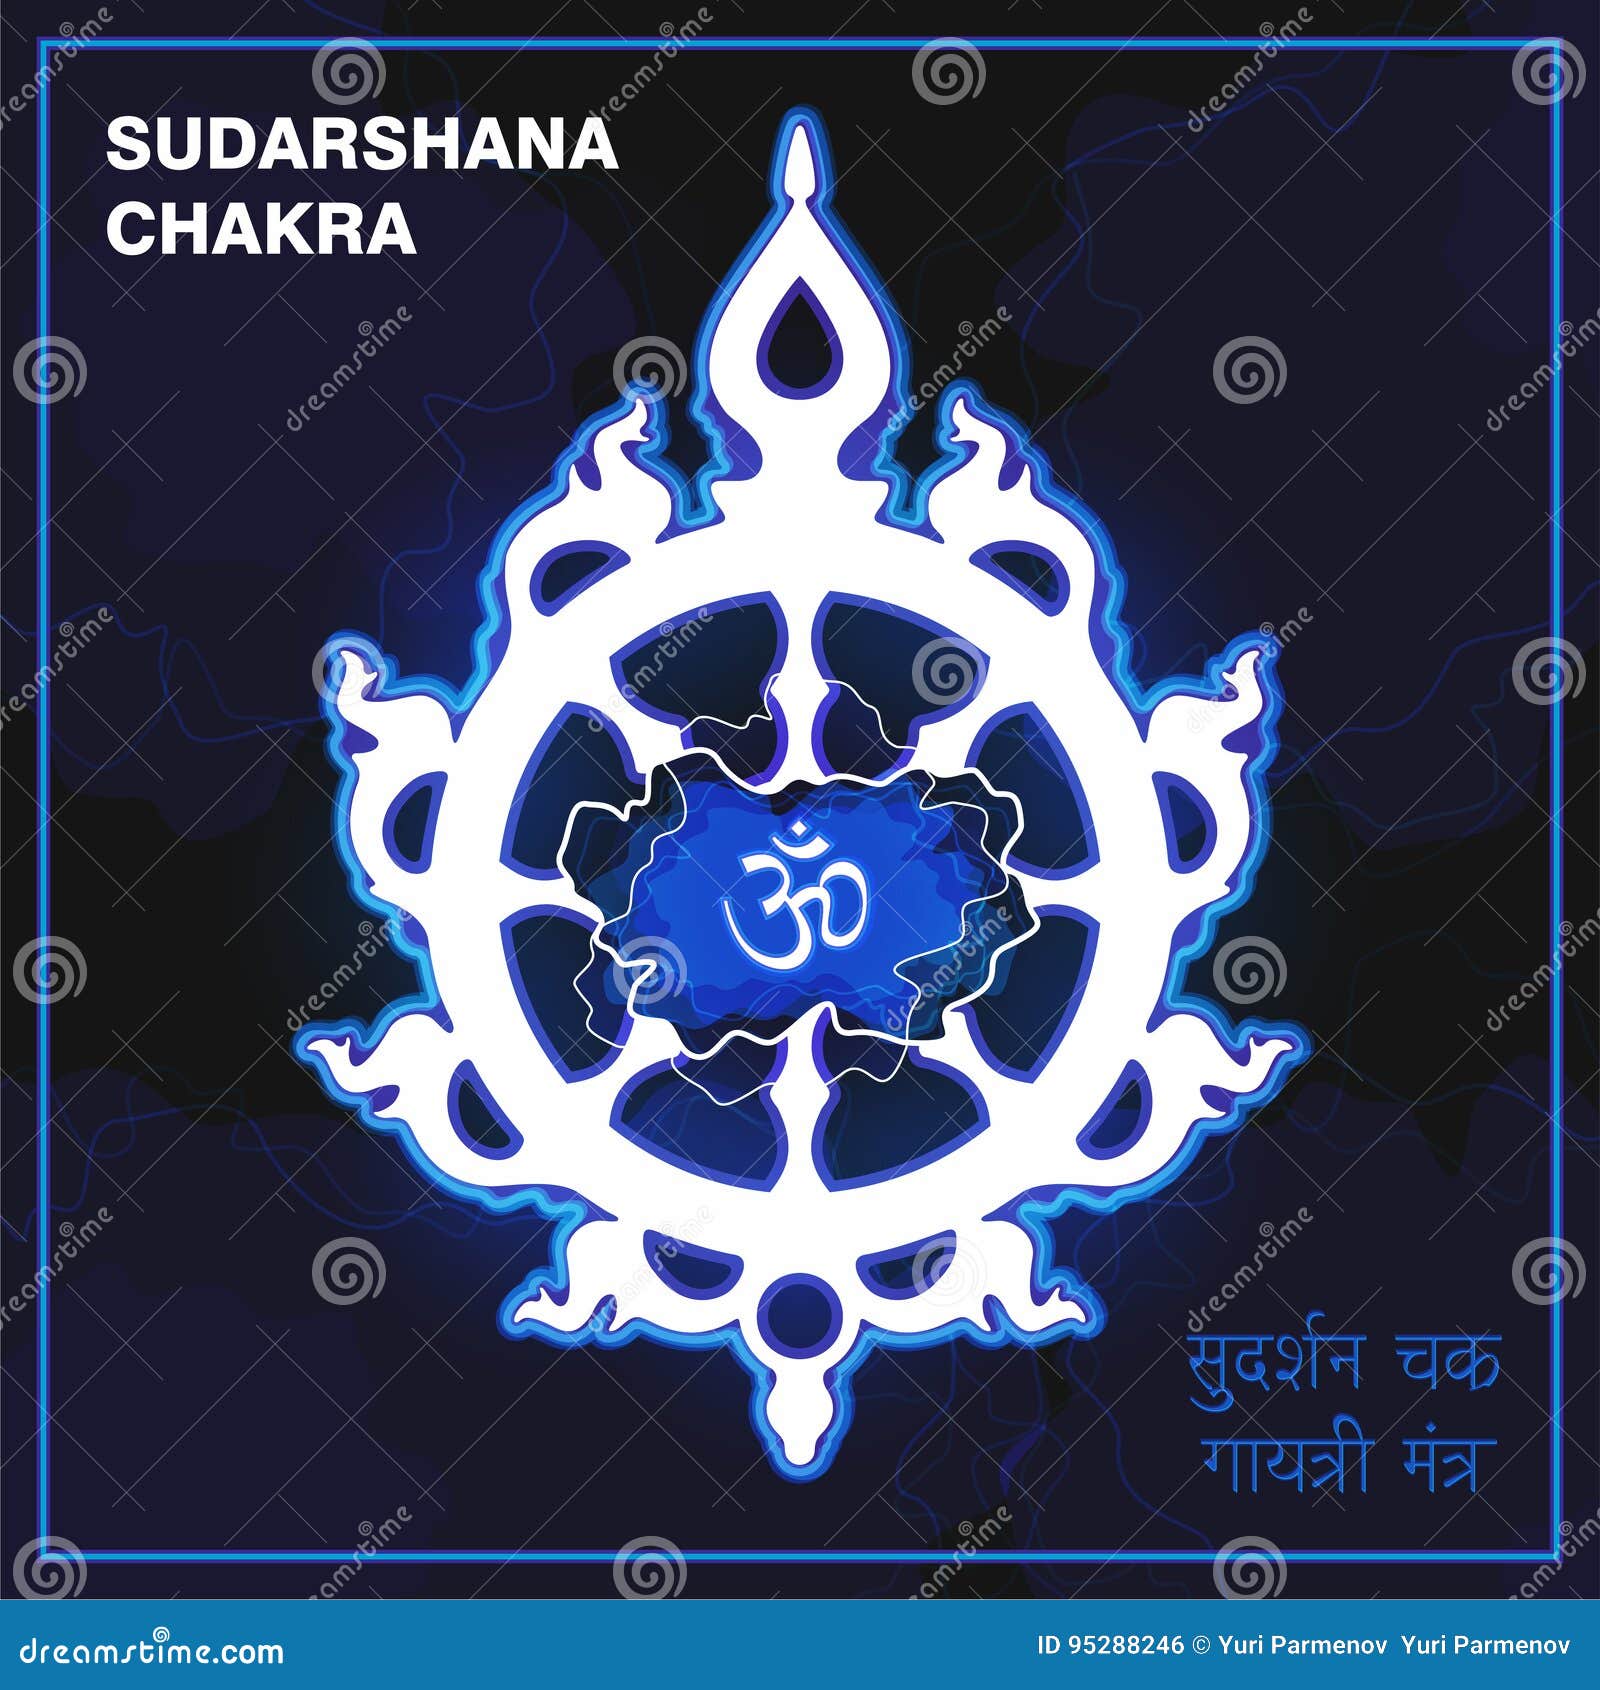 sudarshana chakra fiery disc attribute weapon lord krishna religious symbol hinduism vector illustration sudarshan 95288246